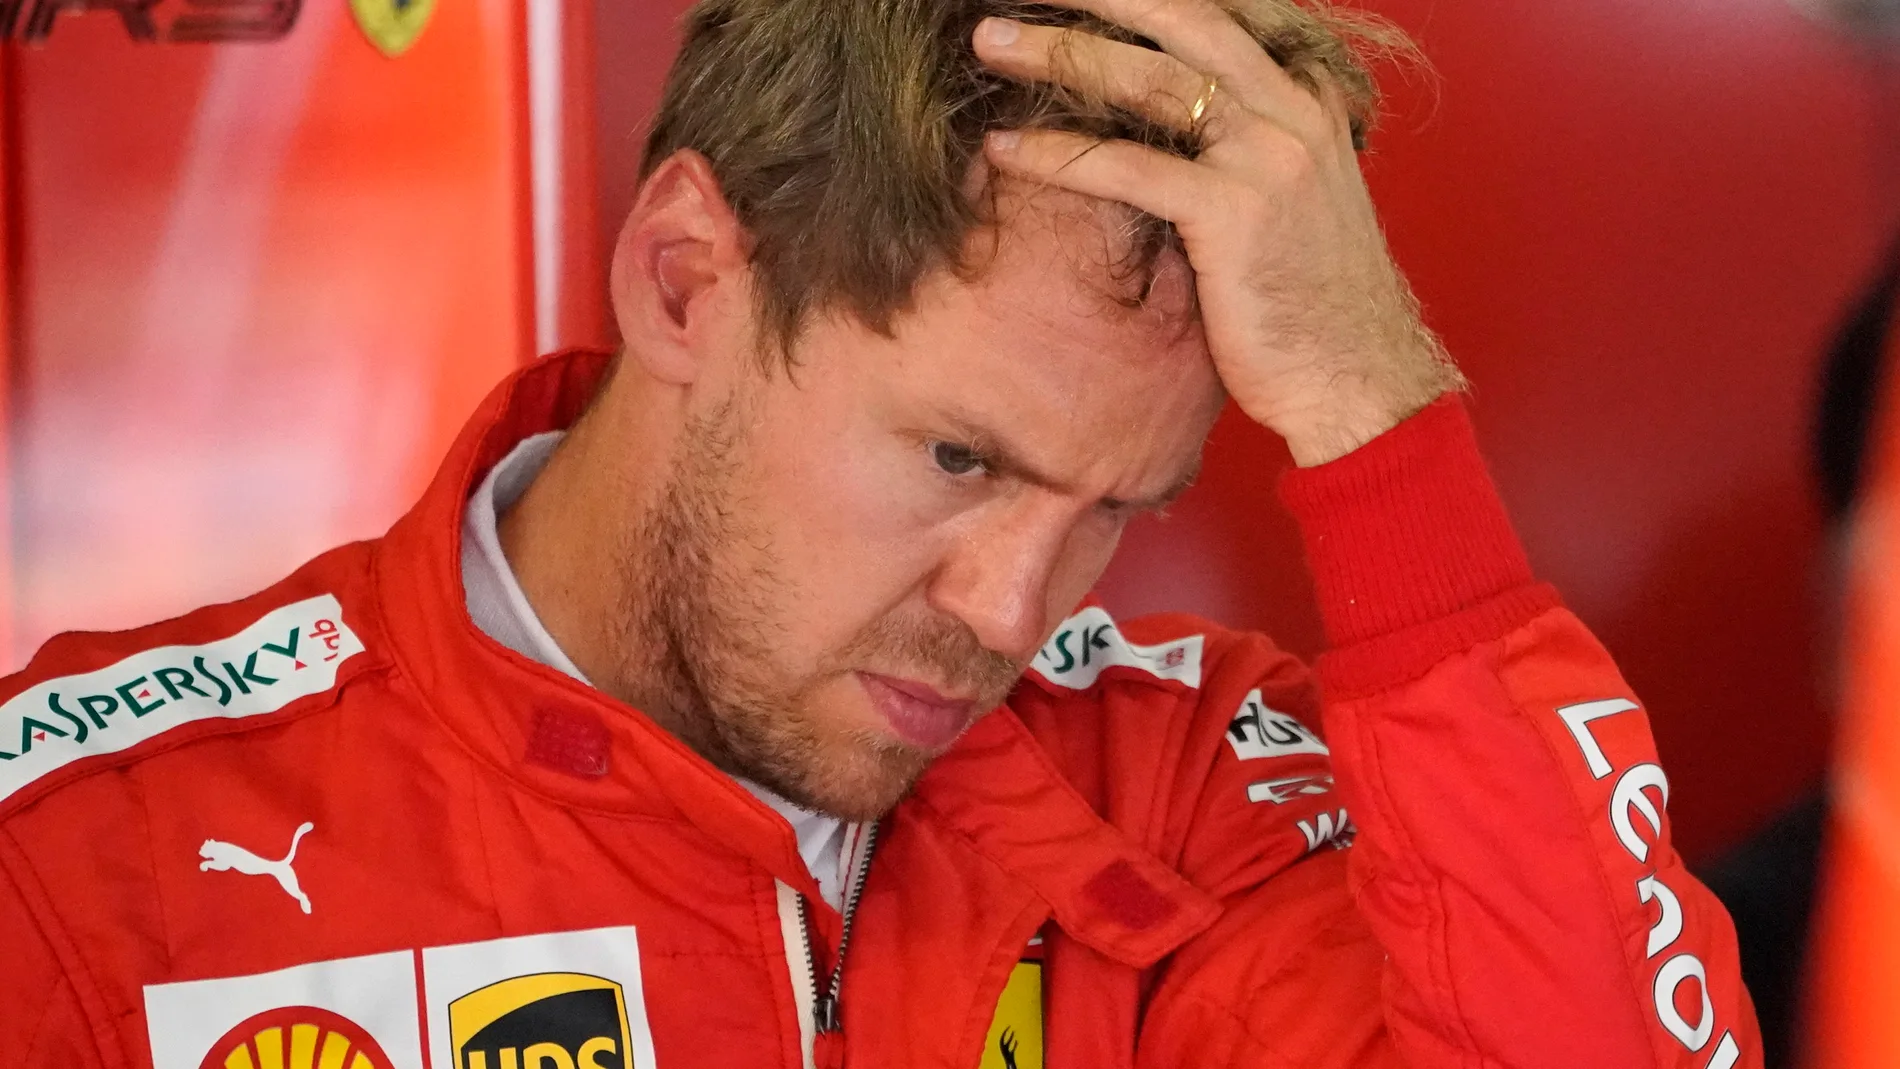 German Formula One driver Sebastian Vettel of Scuderia Ferrari to leave team Ferrari after 2020 season